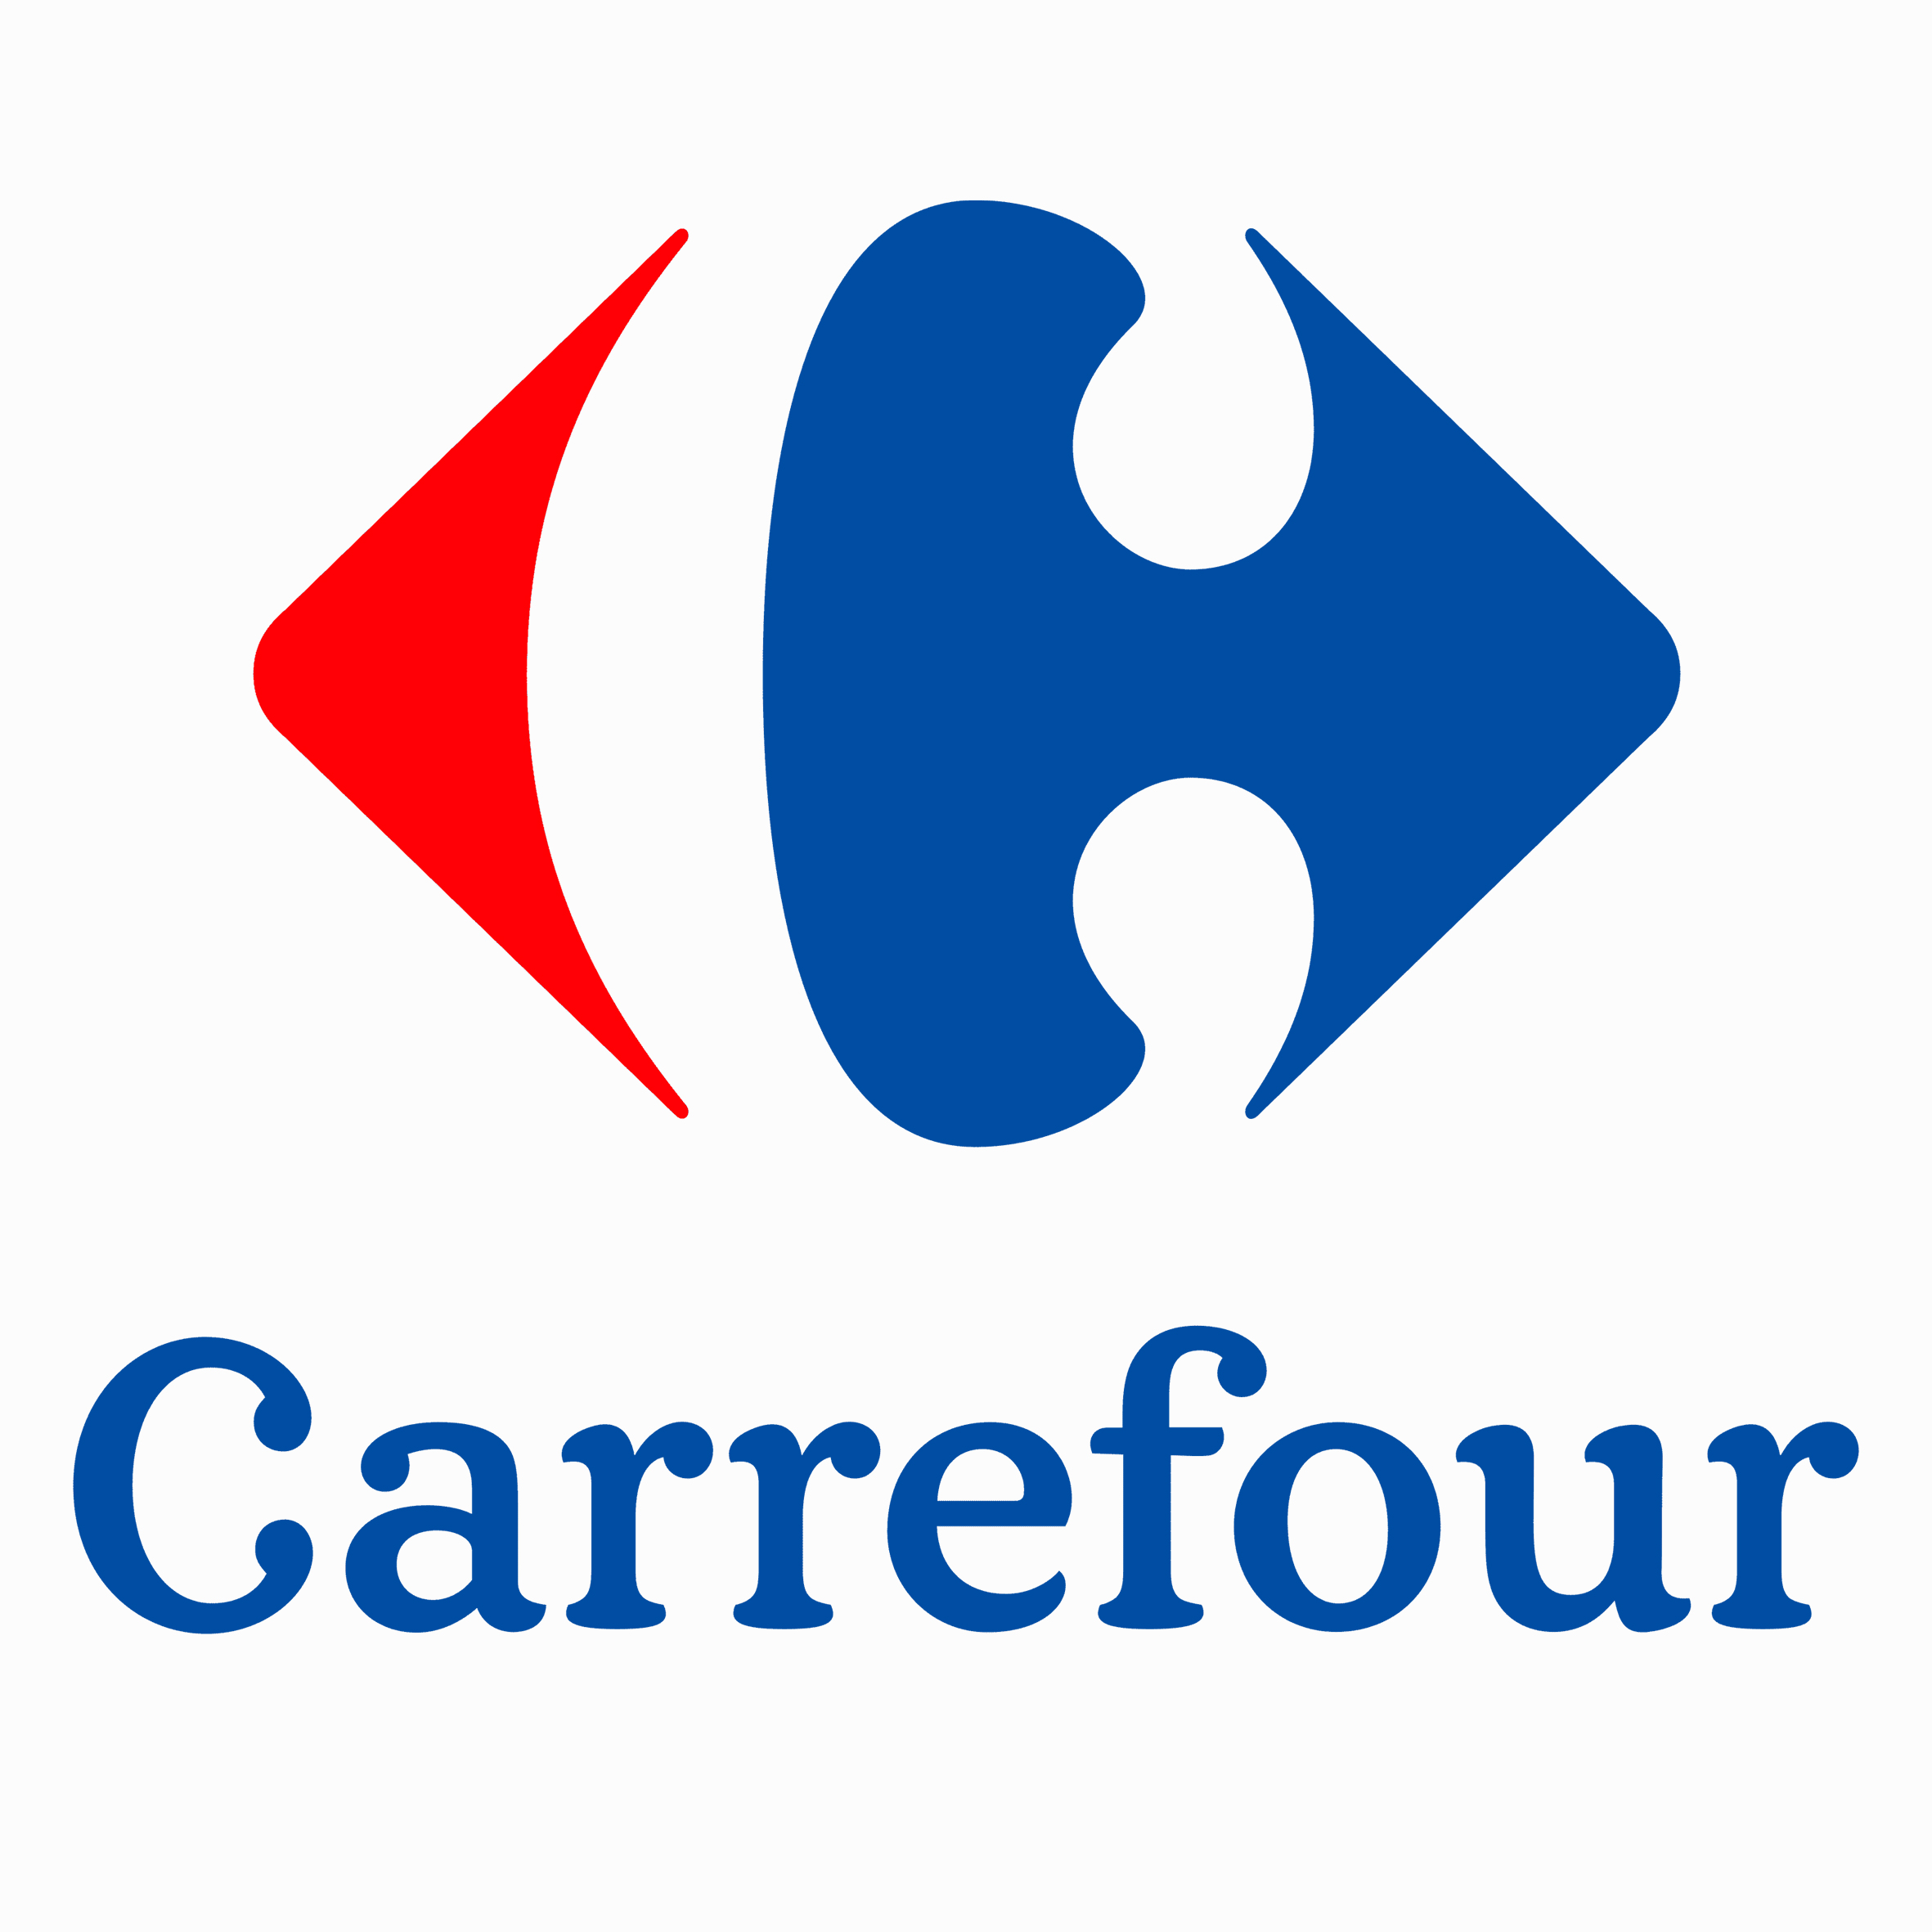 Carrefour retailer logo